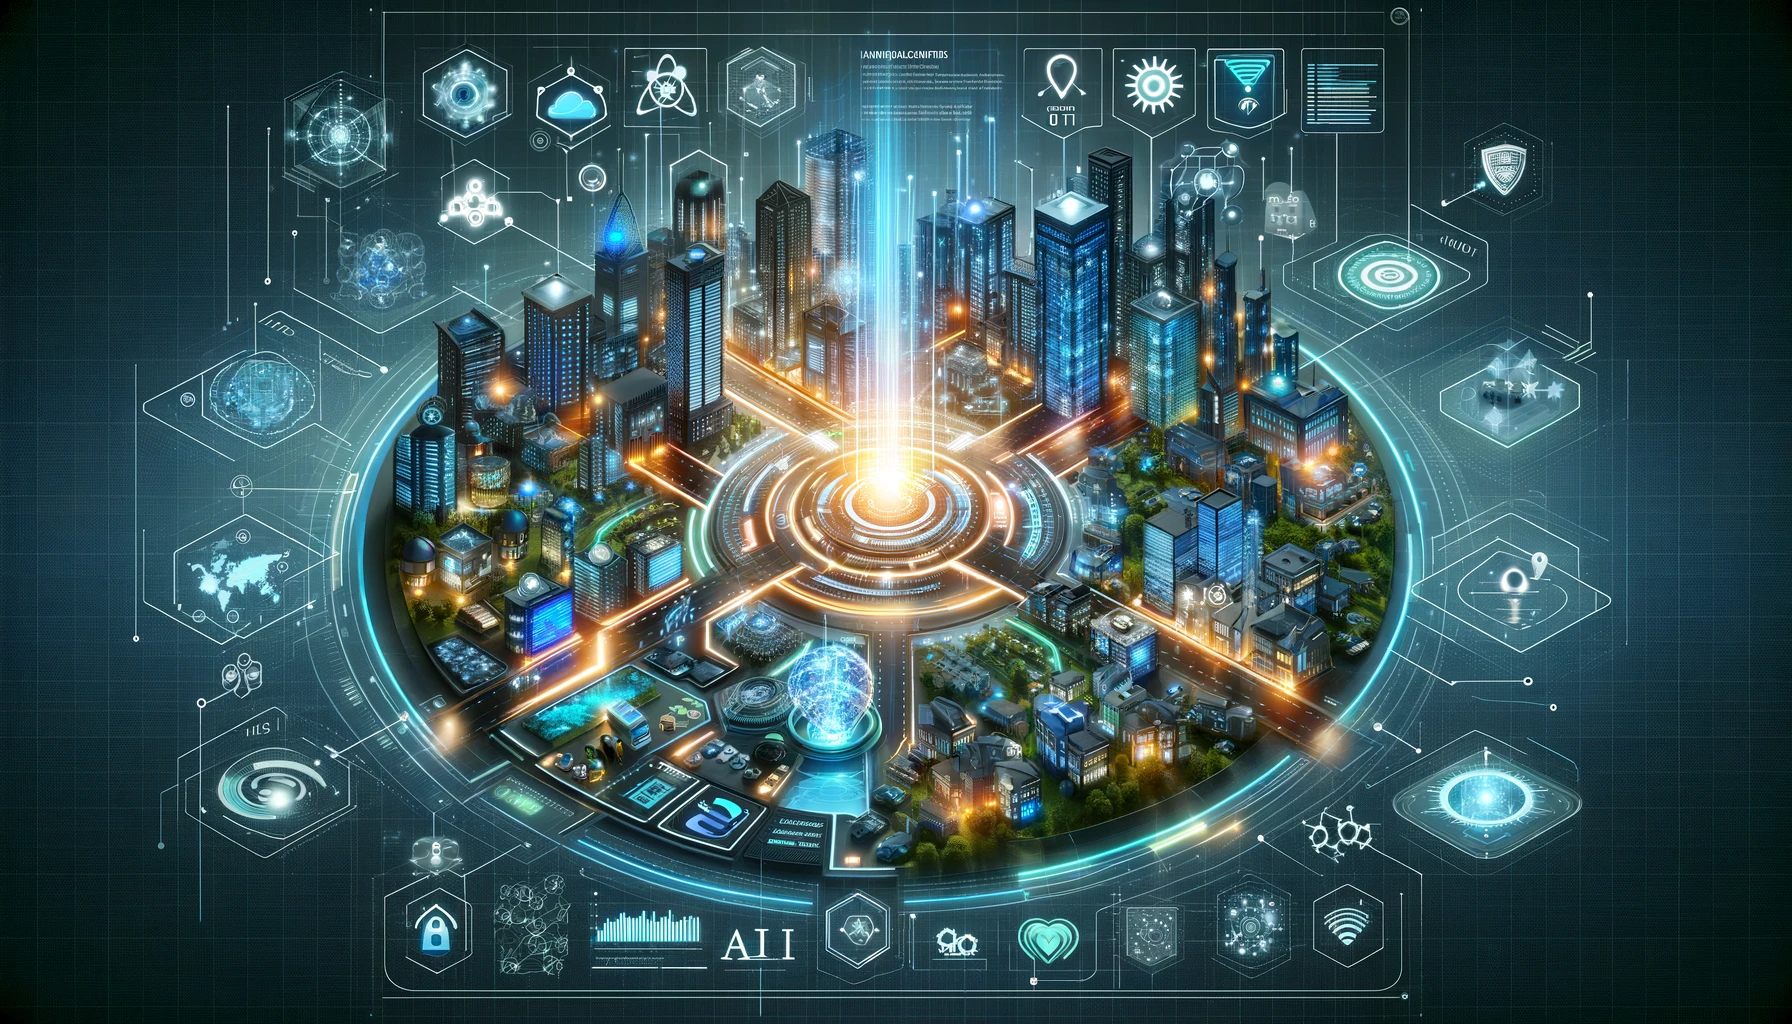 A futuristic smart city management systemgement System